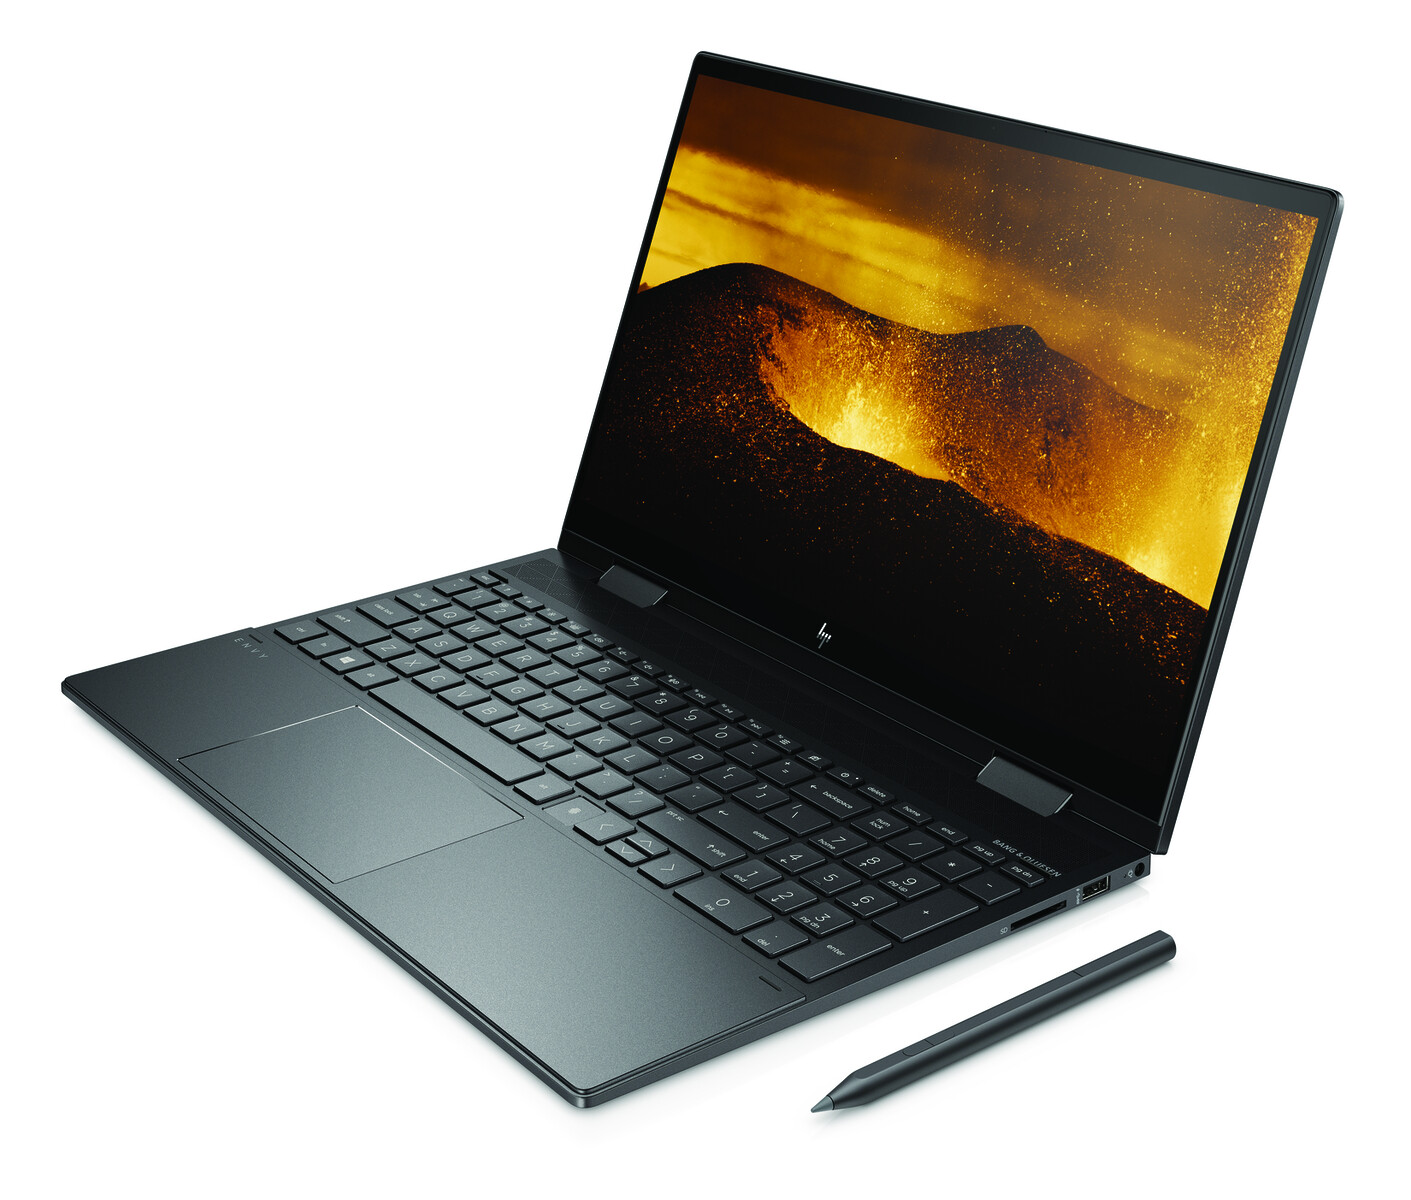 HP, 15인치 2in1 노트북 Envy x360 15 발표 - 미코